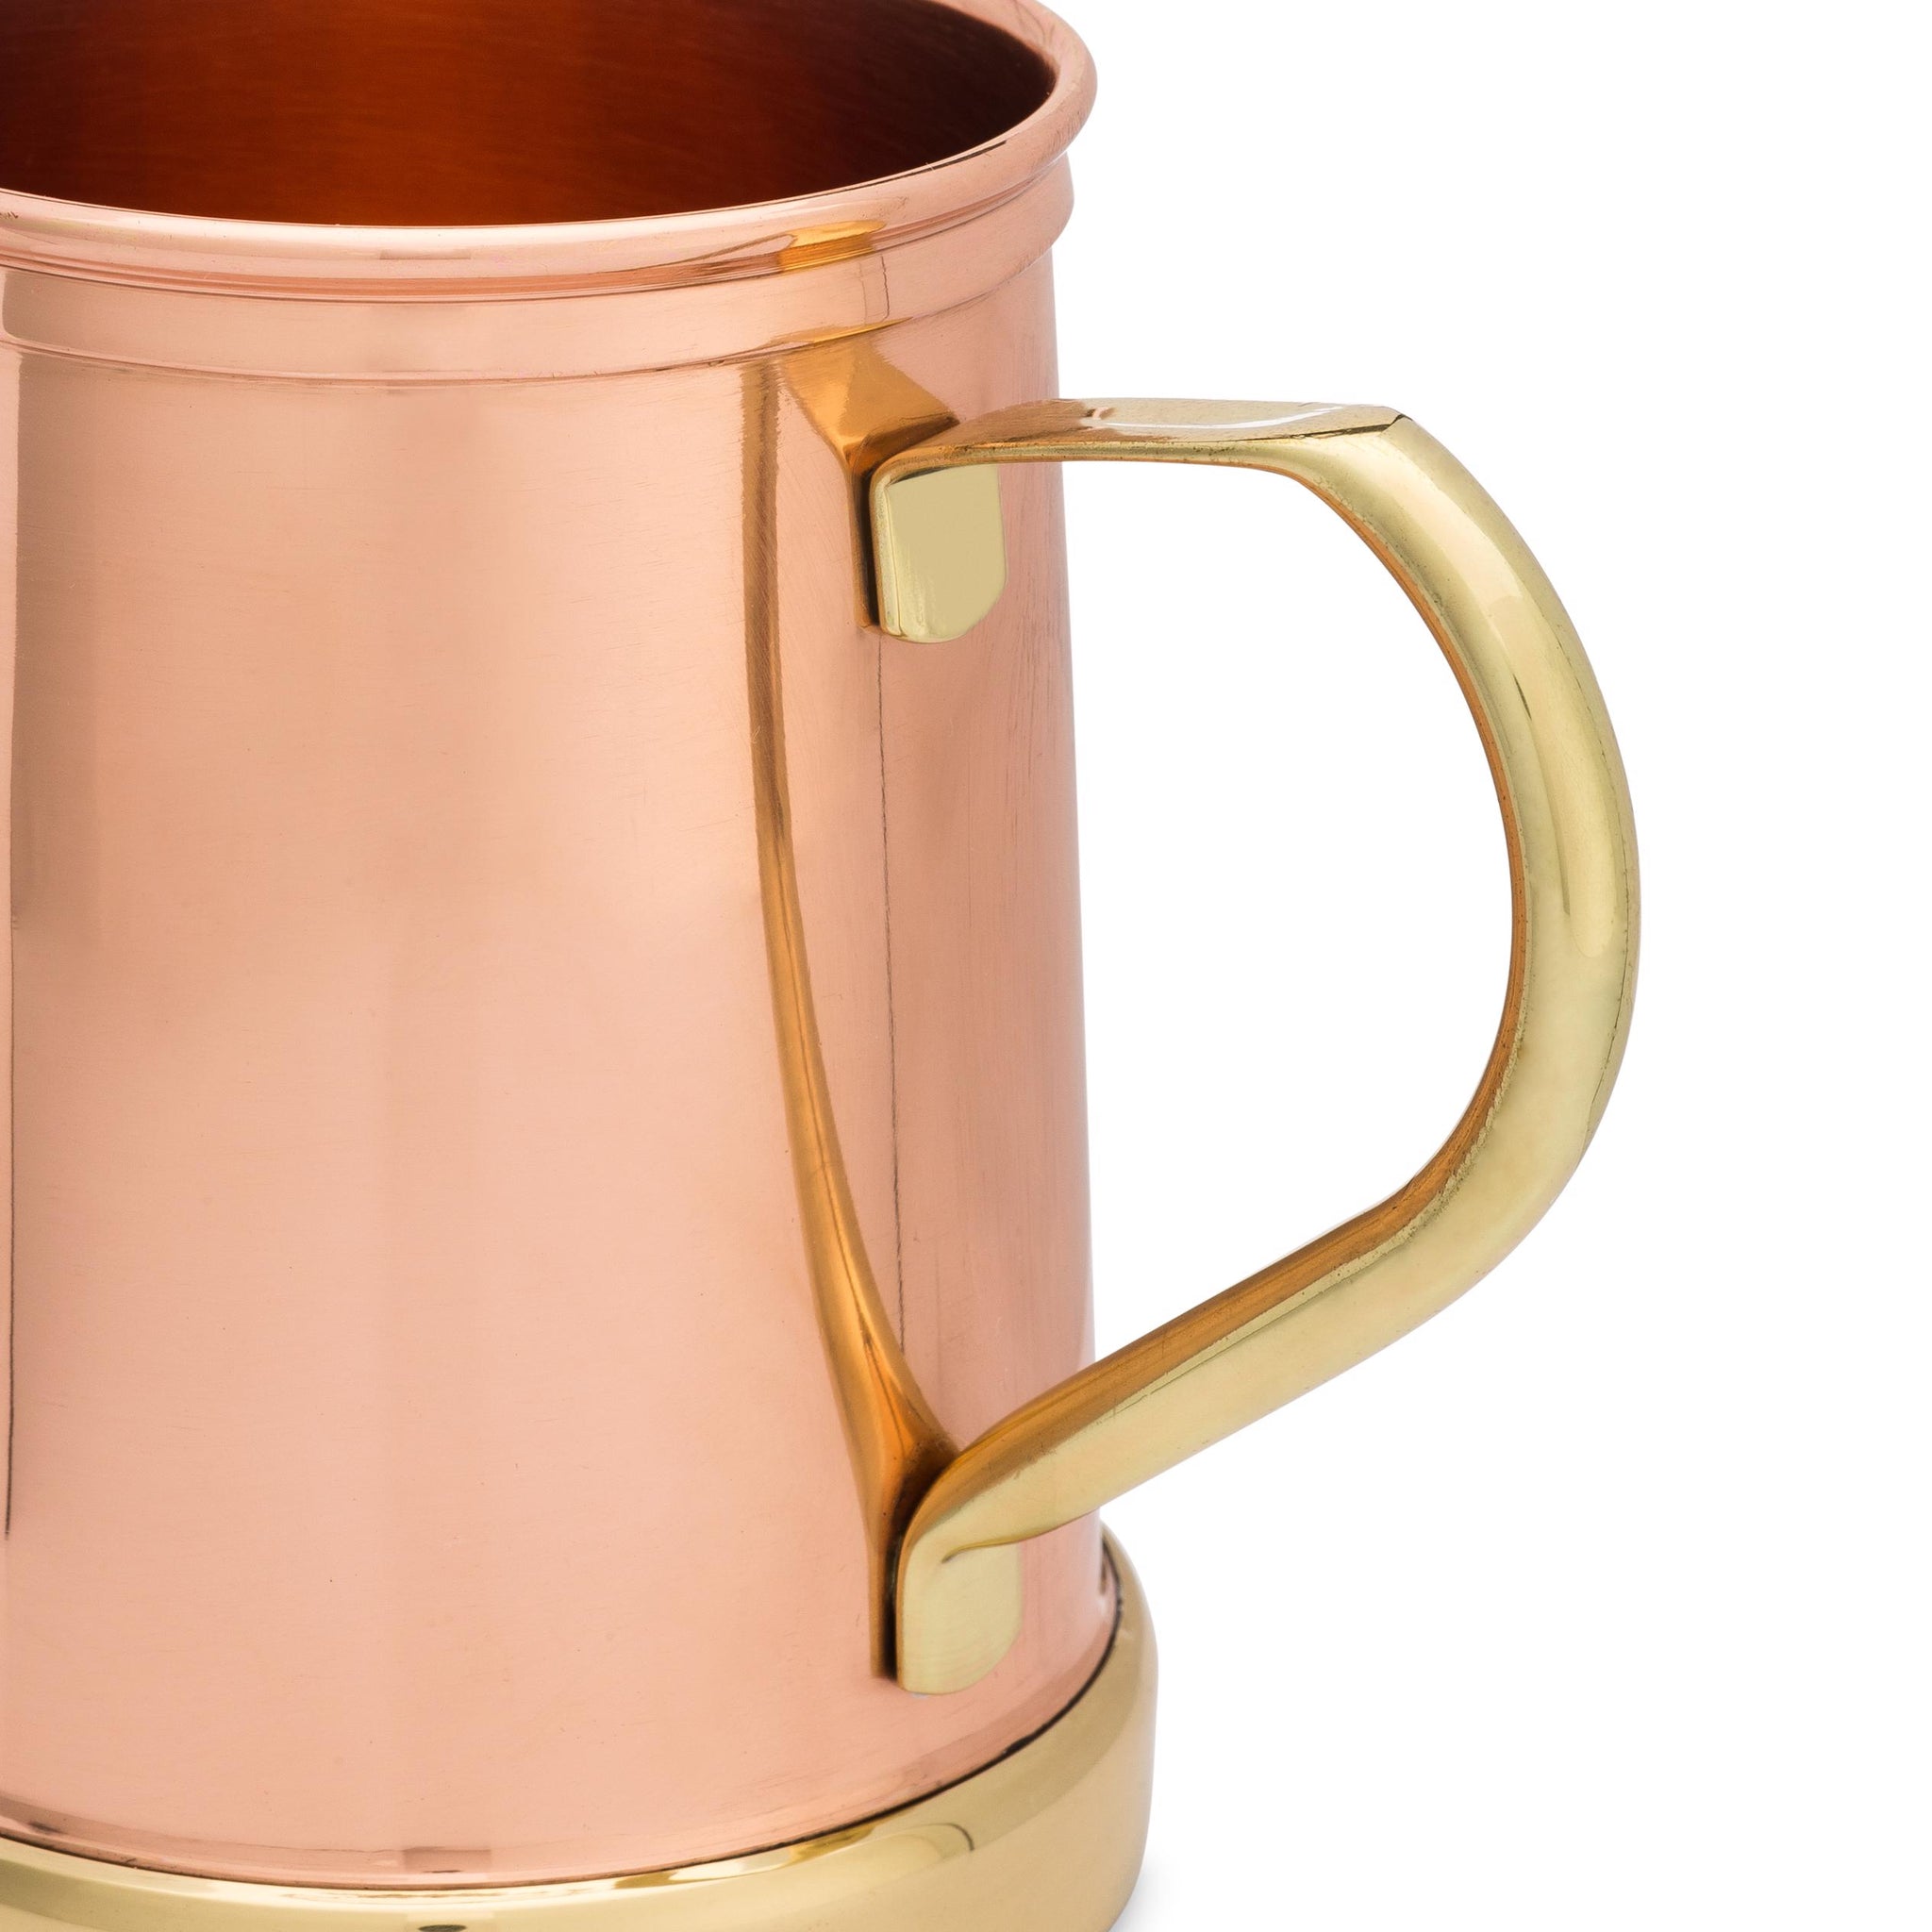 16 Oz. Copper Coated Moscow Mule Mug - AWJH60170 - IdeaStage